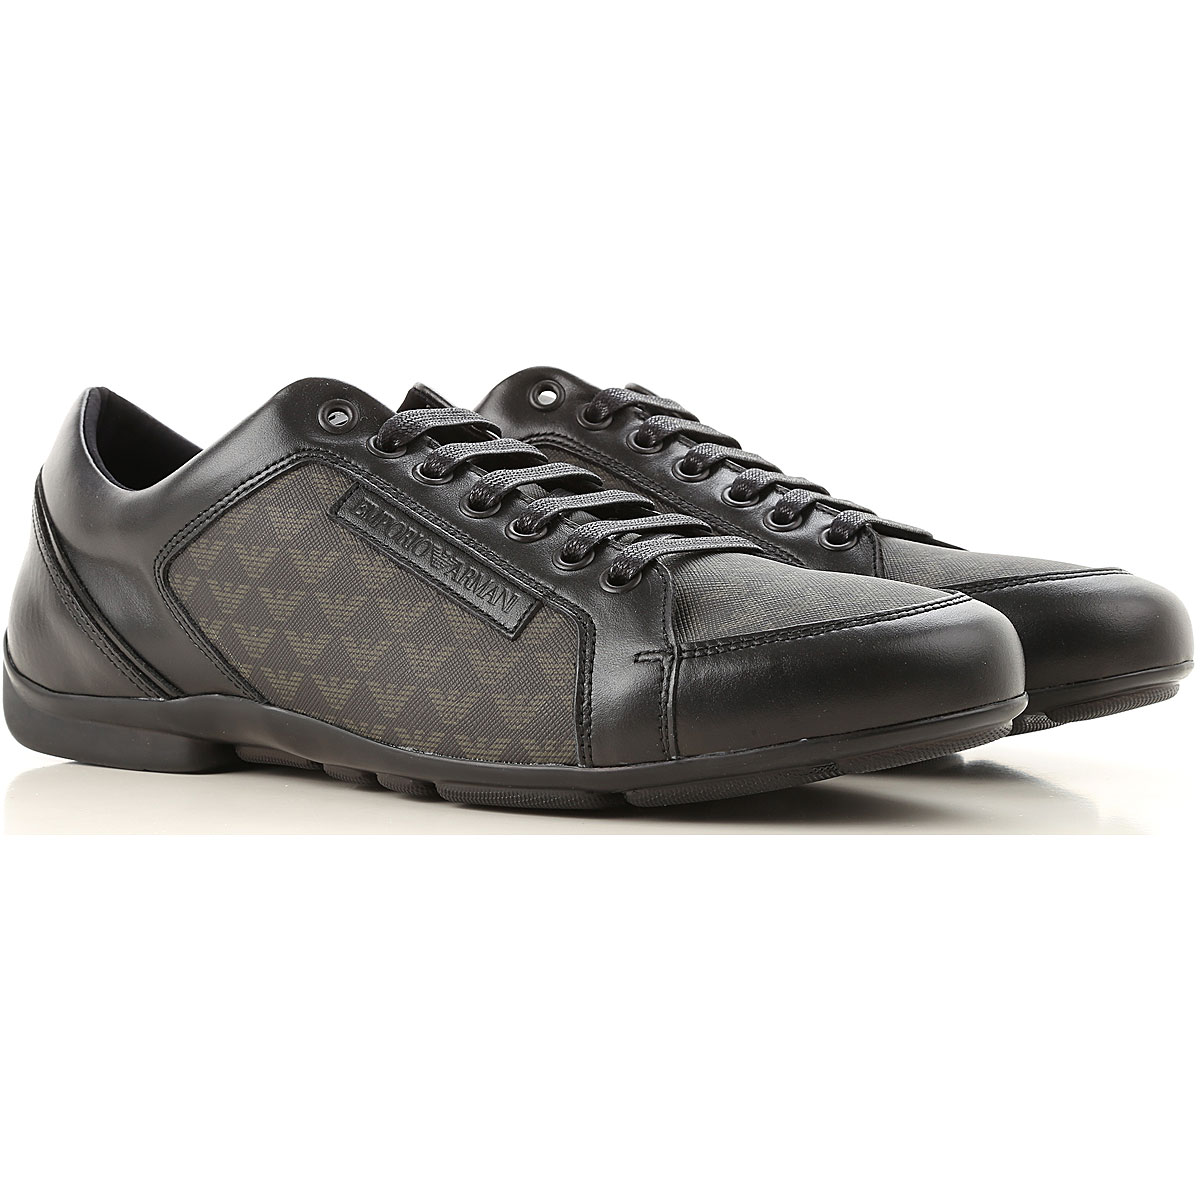 Mens Shoes Emporio Armani, Style code: x4c468-xl020-a792